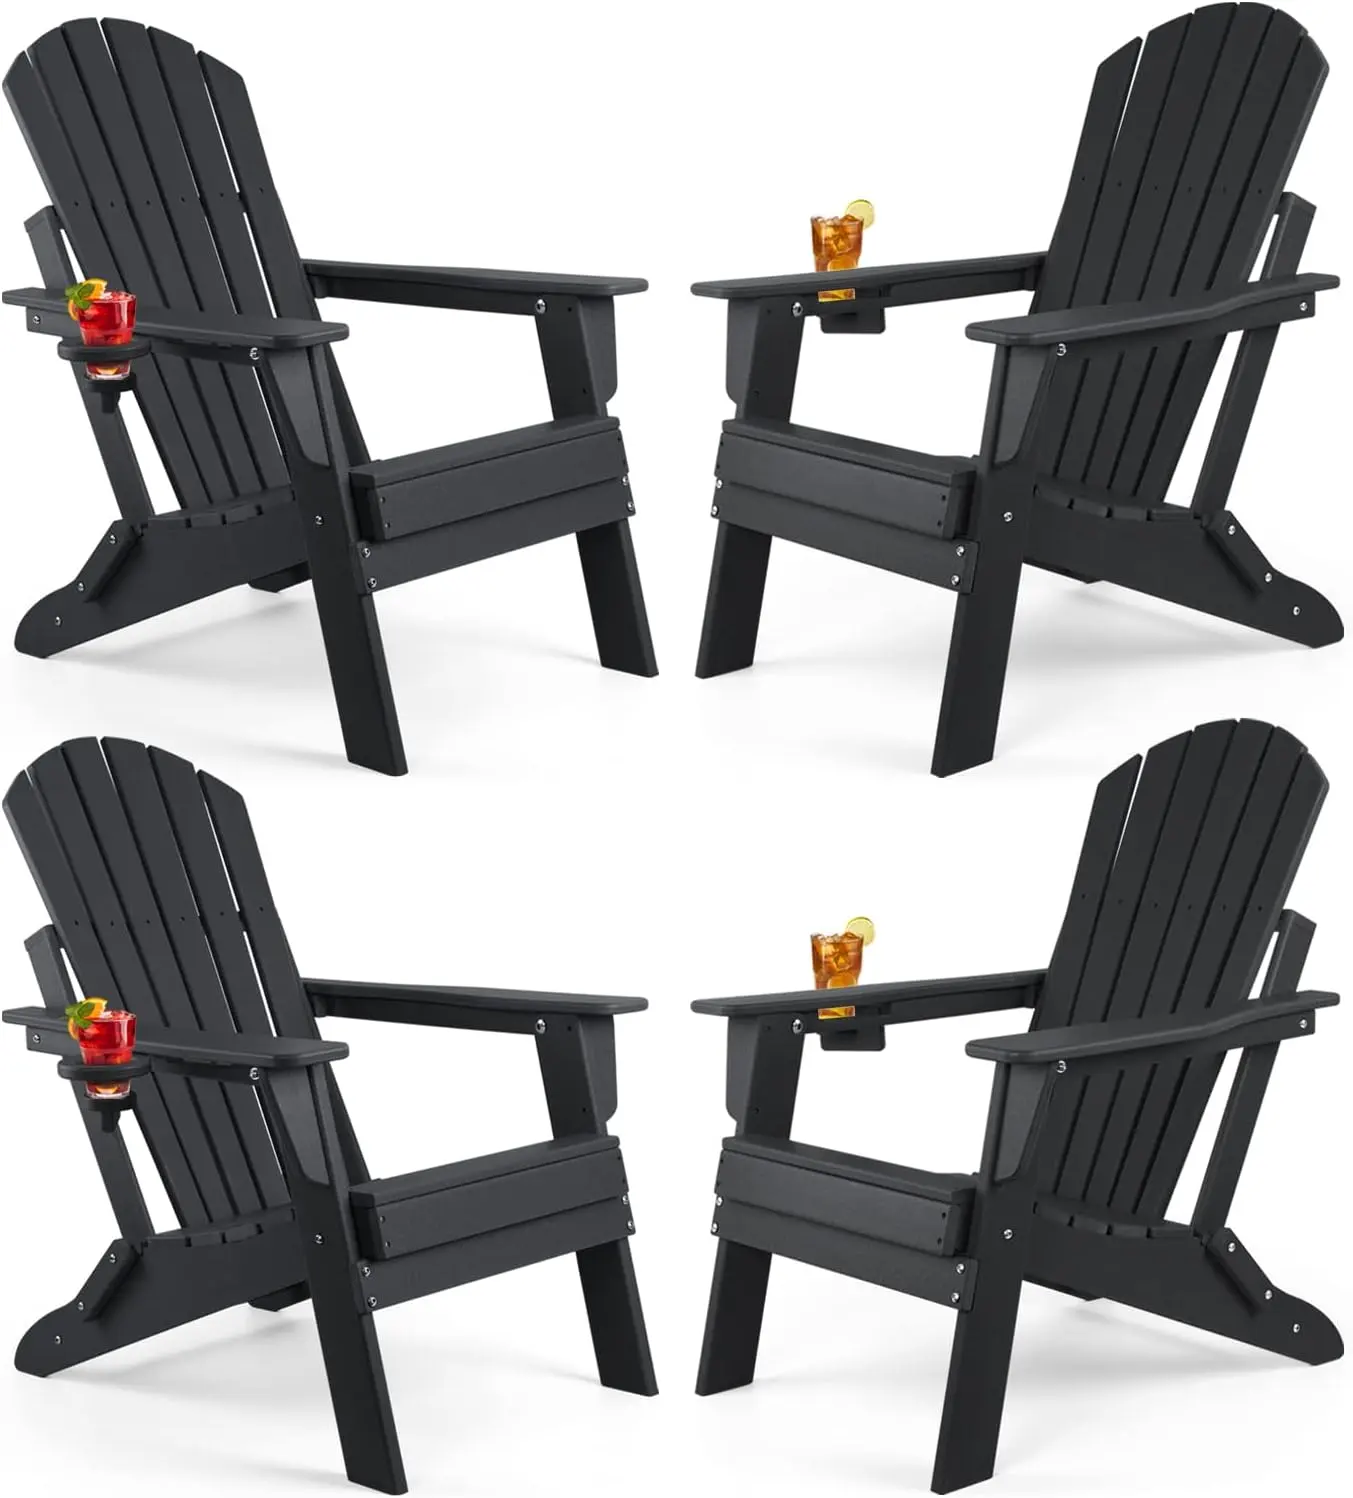 उच्च गुणवत्ता वाले वाटरप्रूफ आंगन गार्डन चेयर प्लास्टिक एडिरोंडैक कुर्सियां फोल्डिंग फर्नीचर